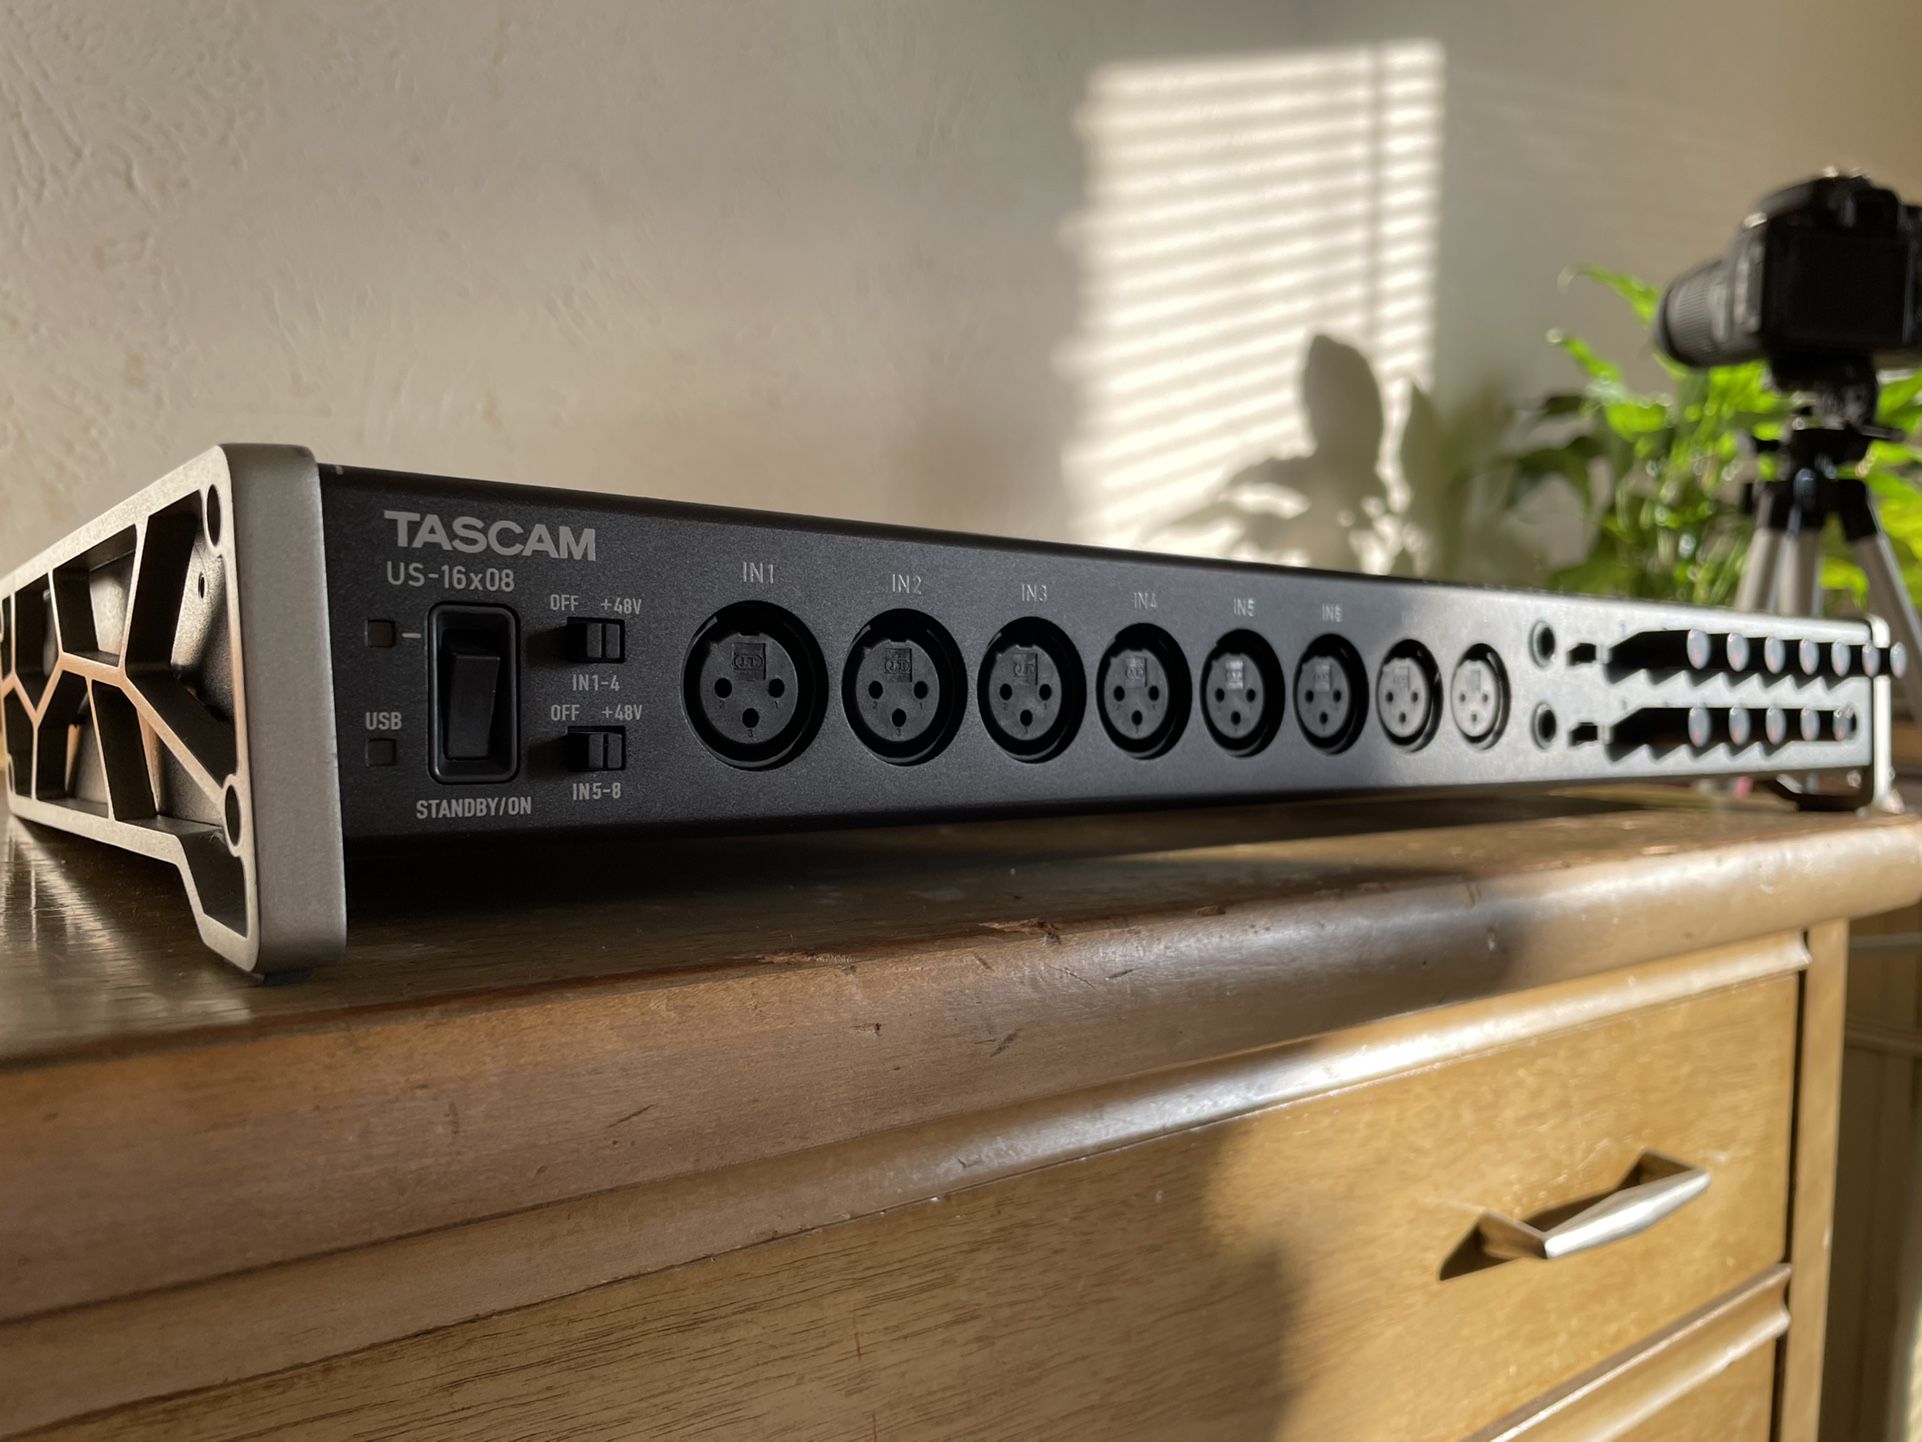 Tascam US-16x08 Audio Interface